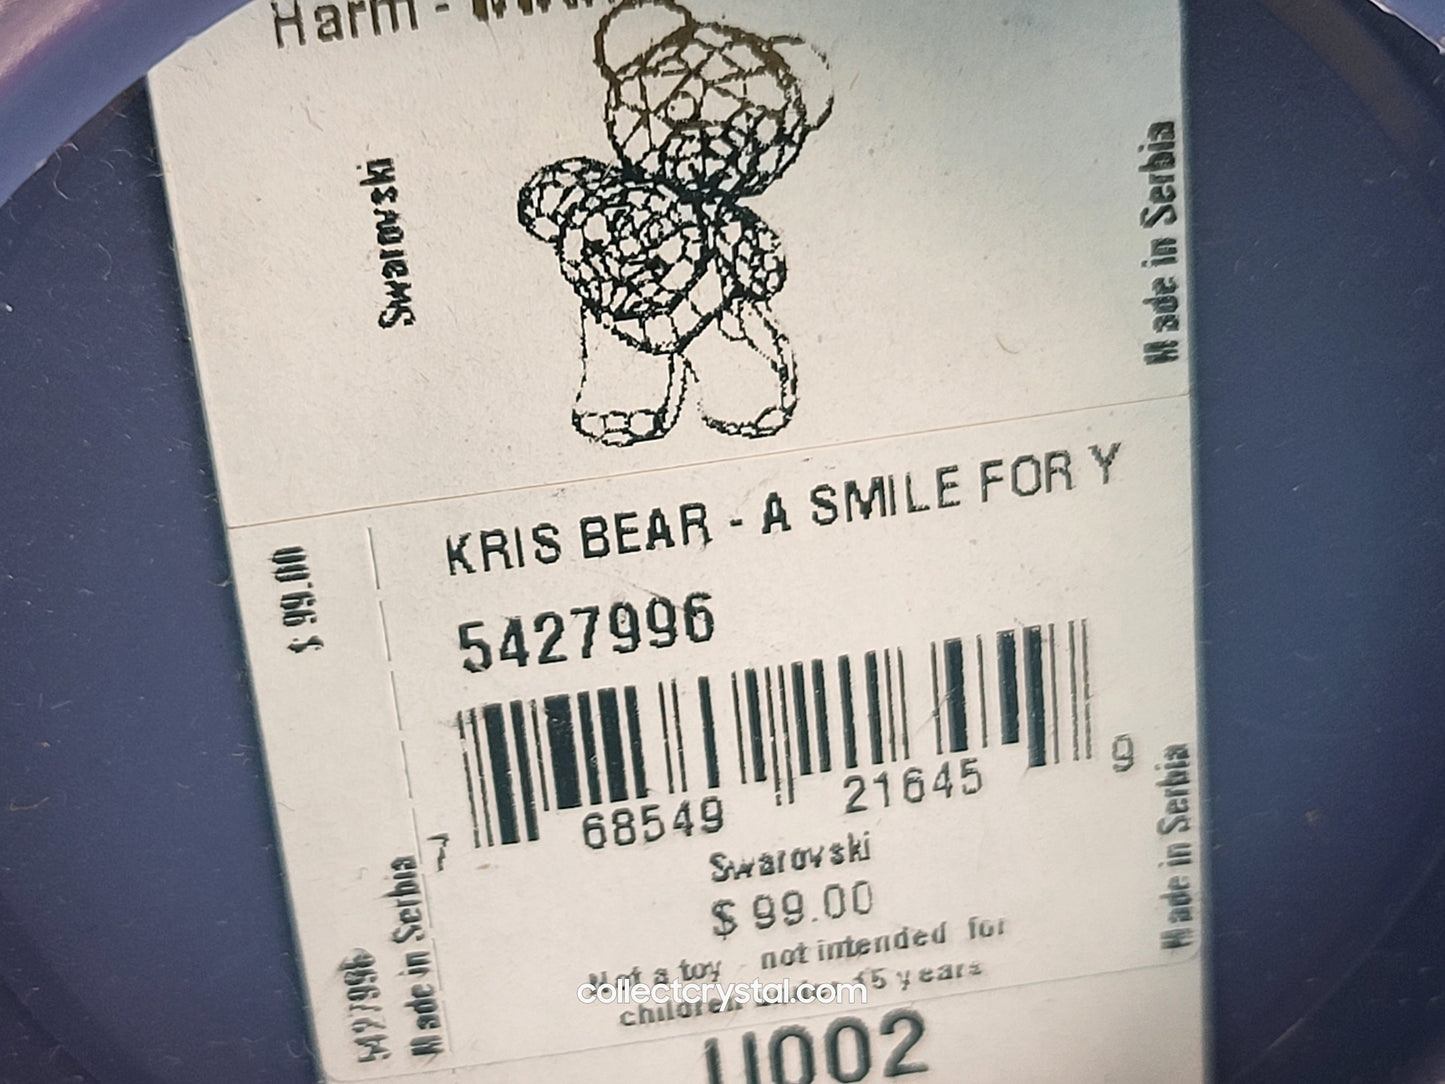 KRIS BEAR – A SMILE FOR YOU 5427996